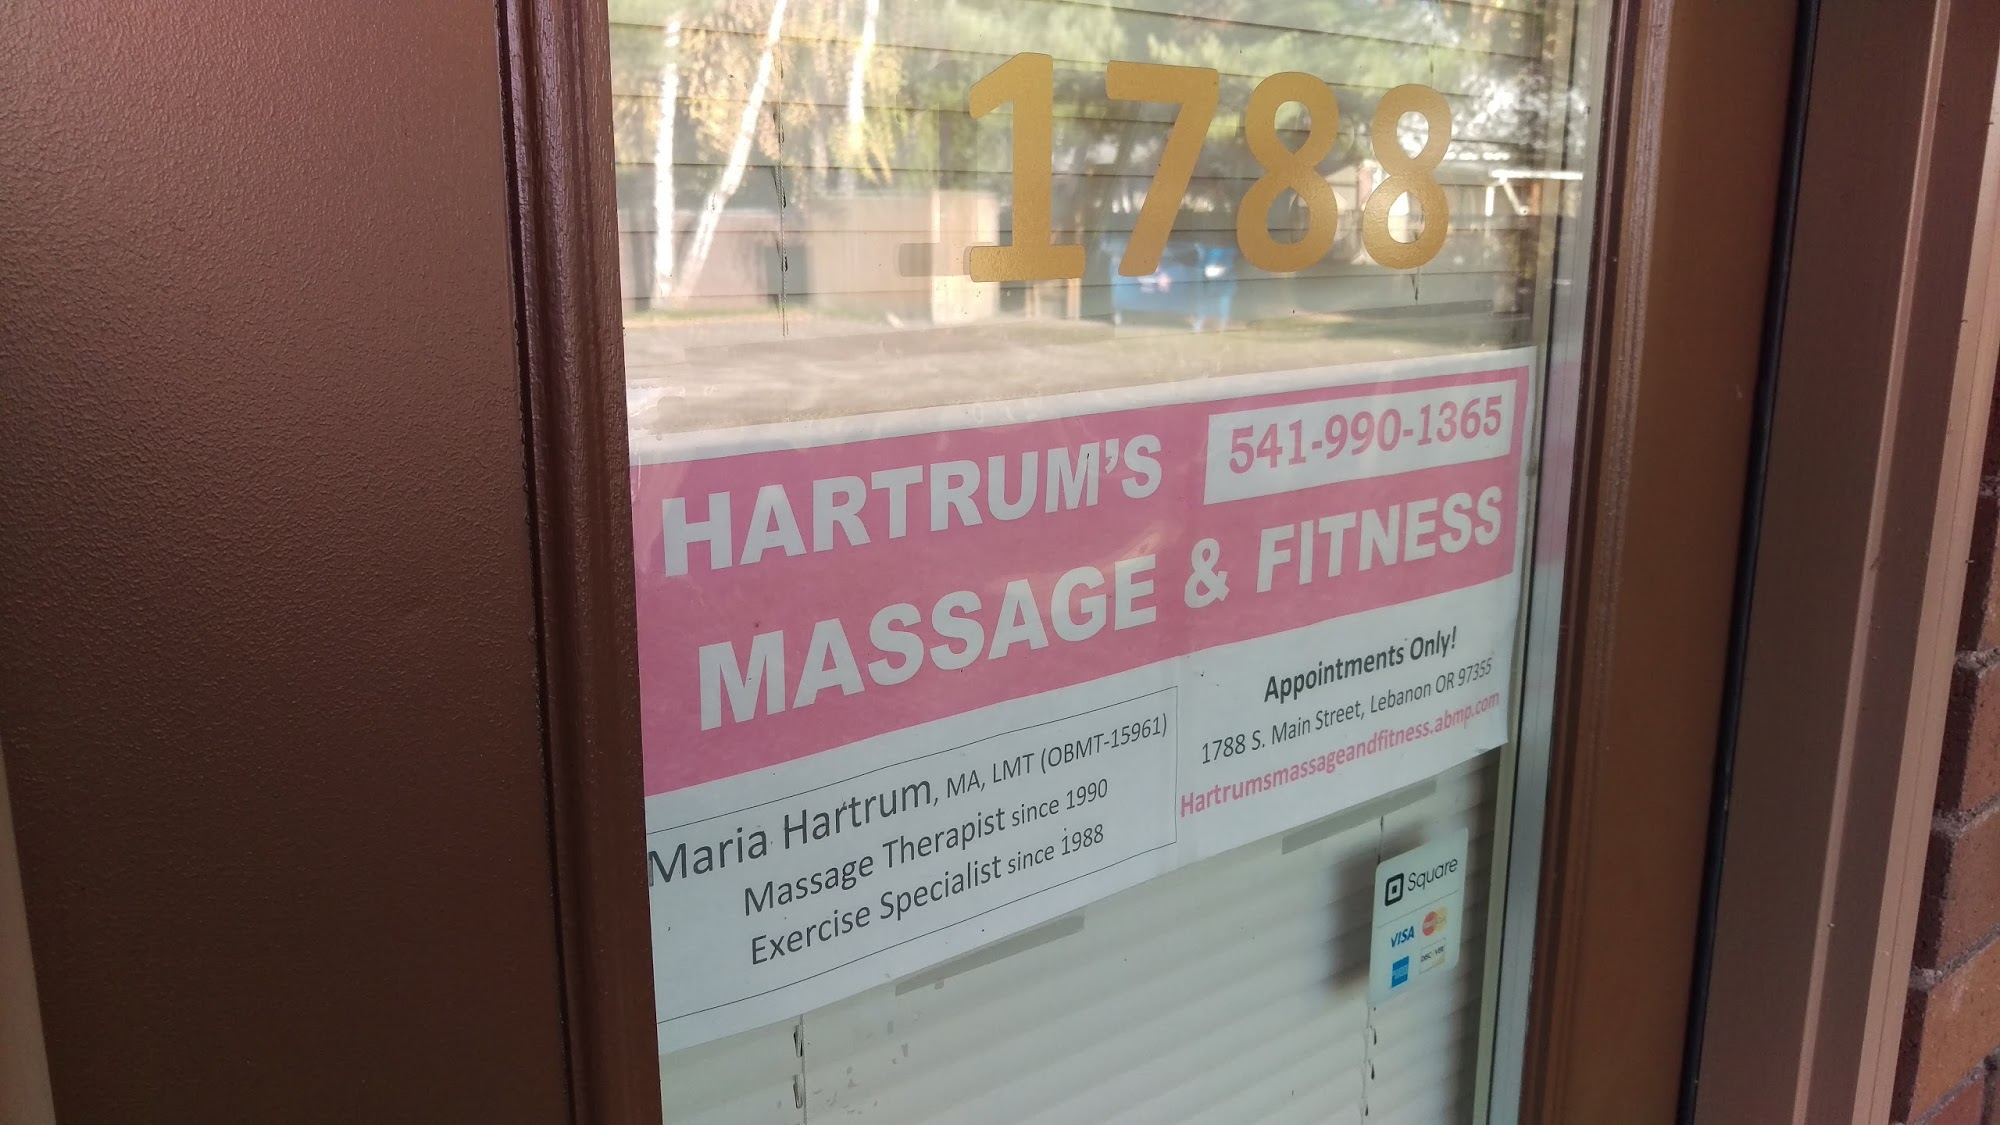 Hartrum's Massage & Fitness